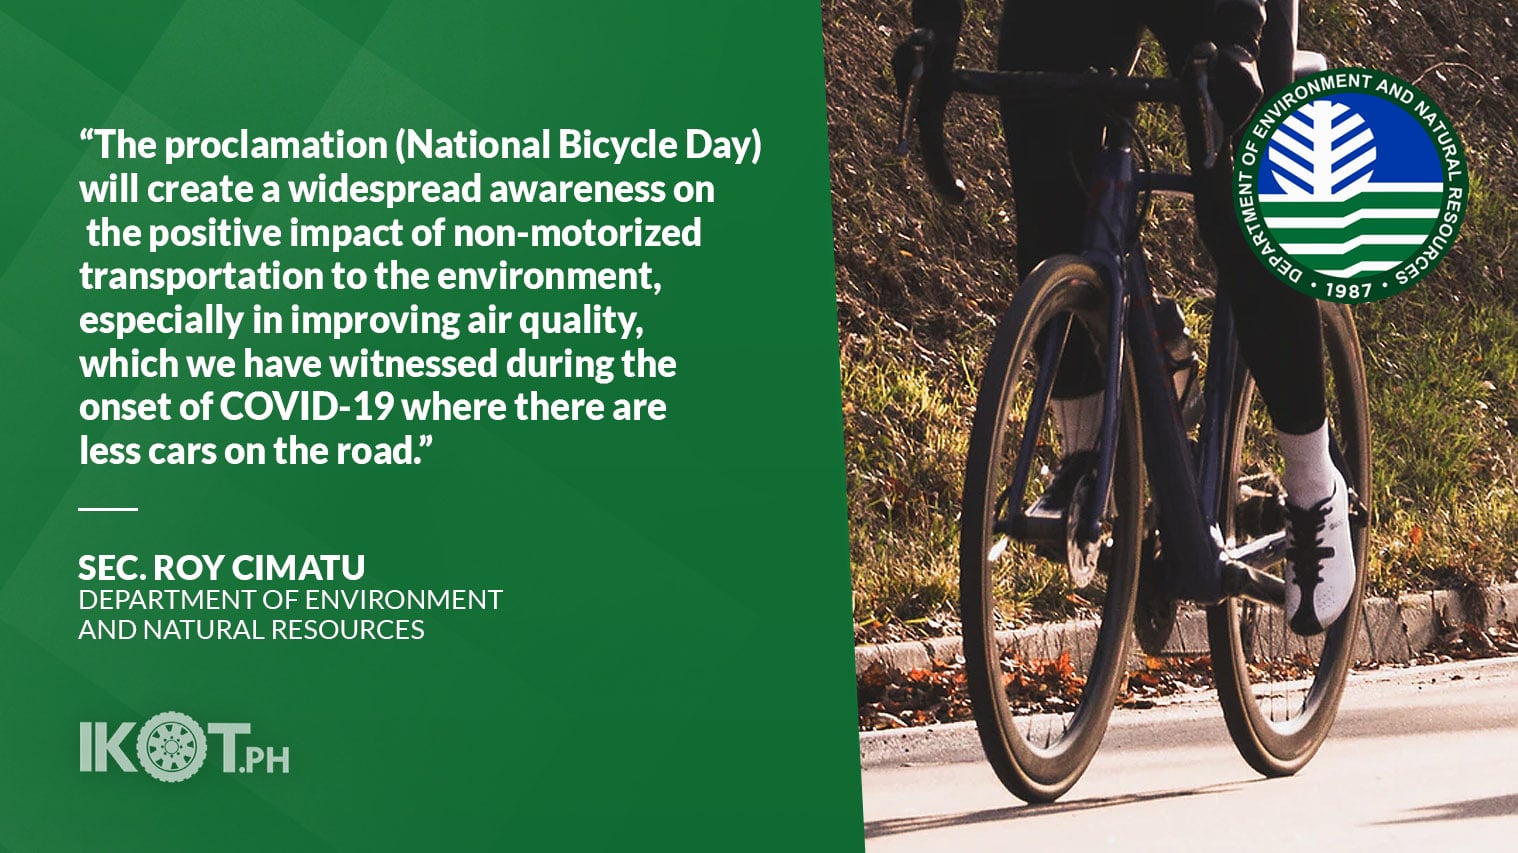 NAT’L BICYCLE DAY TO REDUCE AIR POLLUTION CIMATU — IKOT.PH